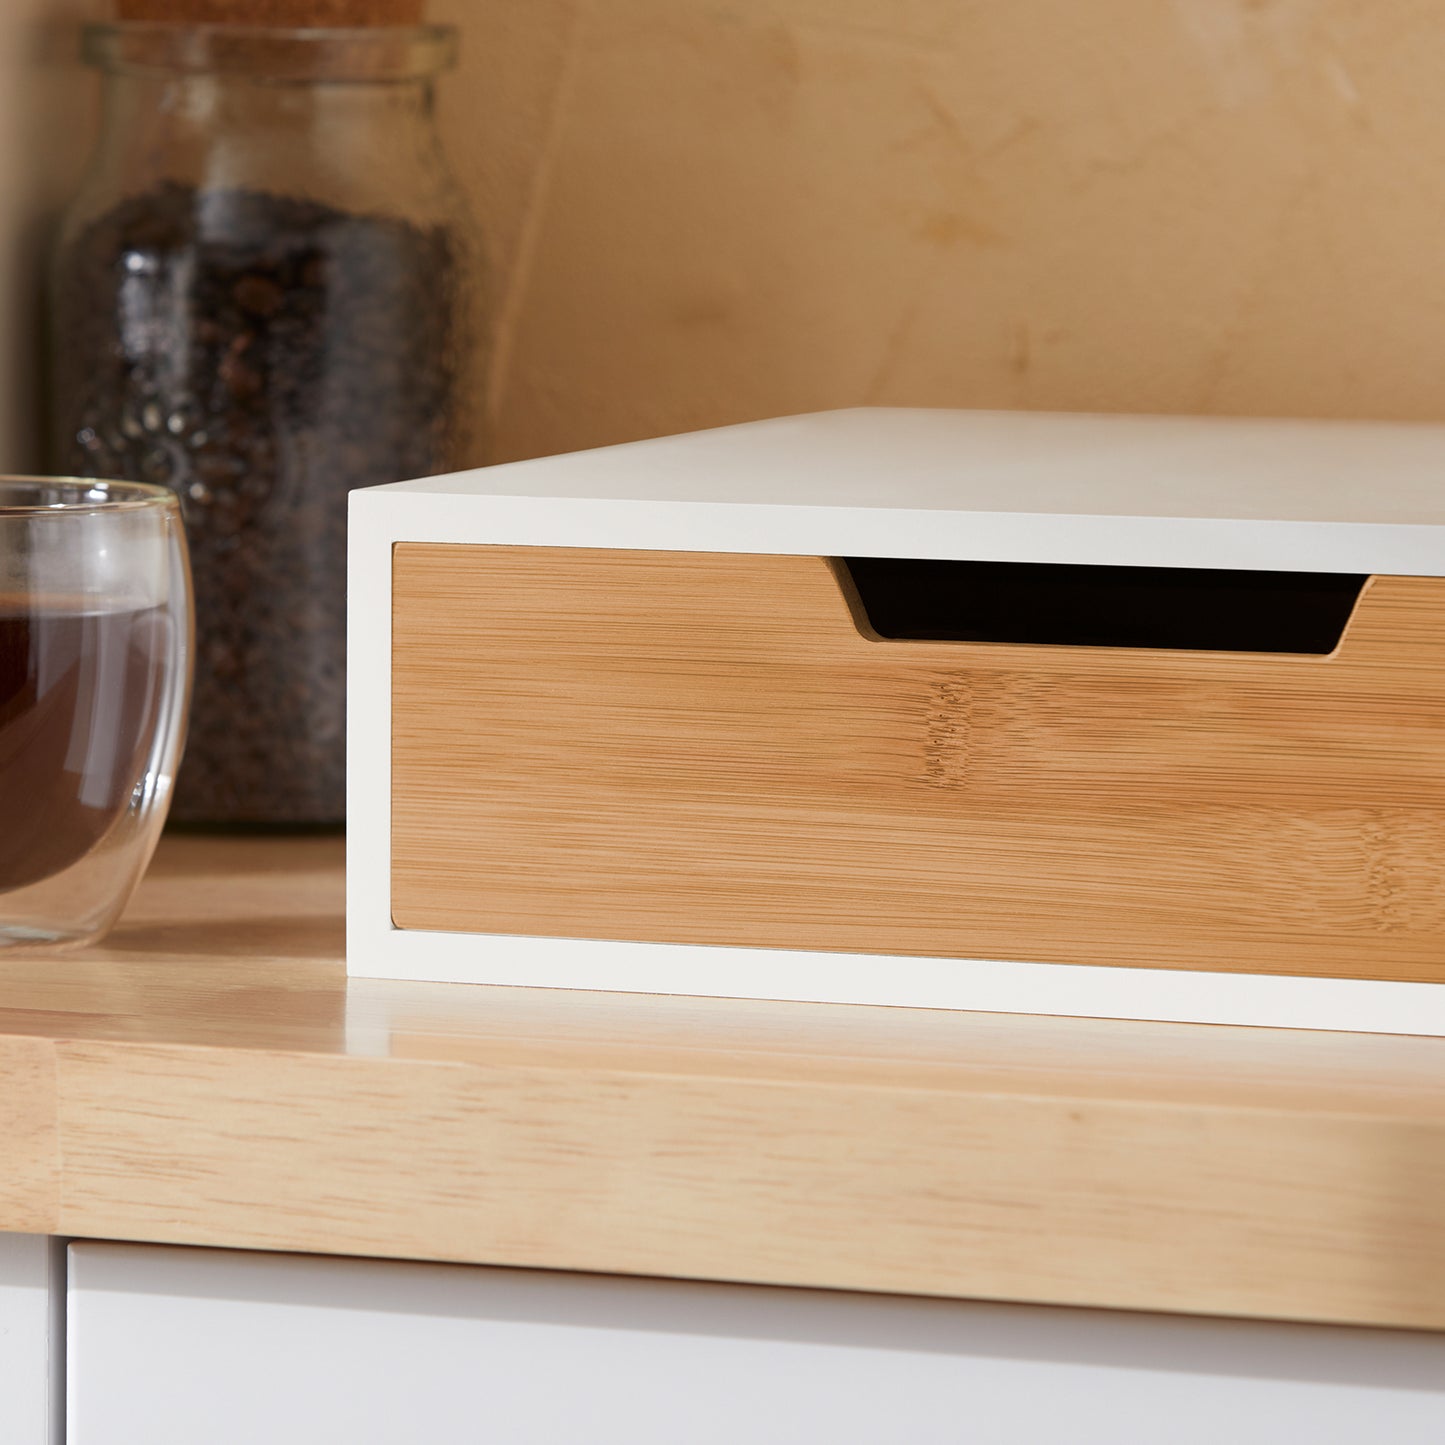 SoBuy FRG179-WN, Coffee Pod Storage Drawer, Coffee Capsule Holder Stand Box,Teabags Storage Case